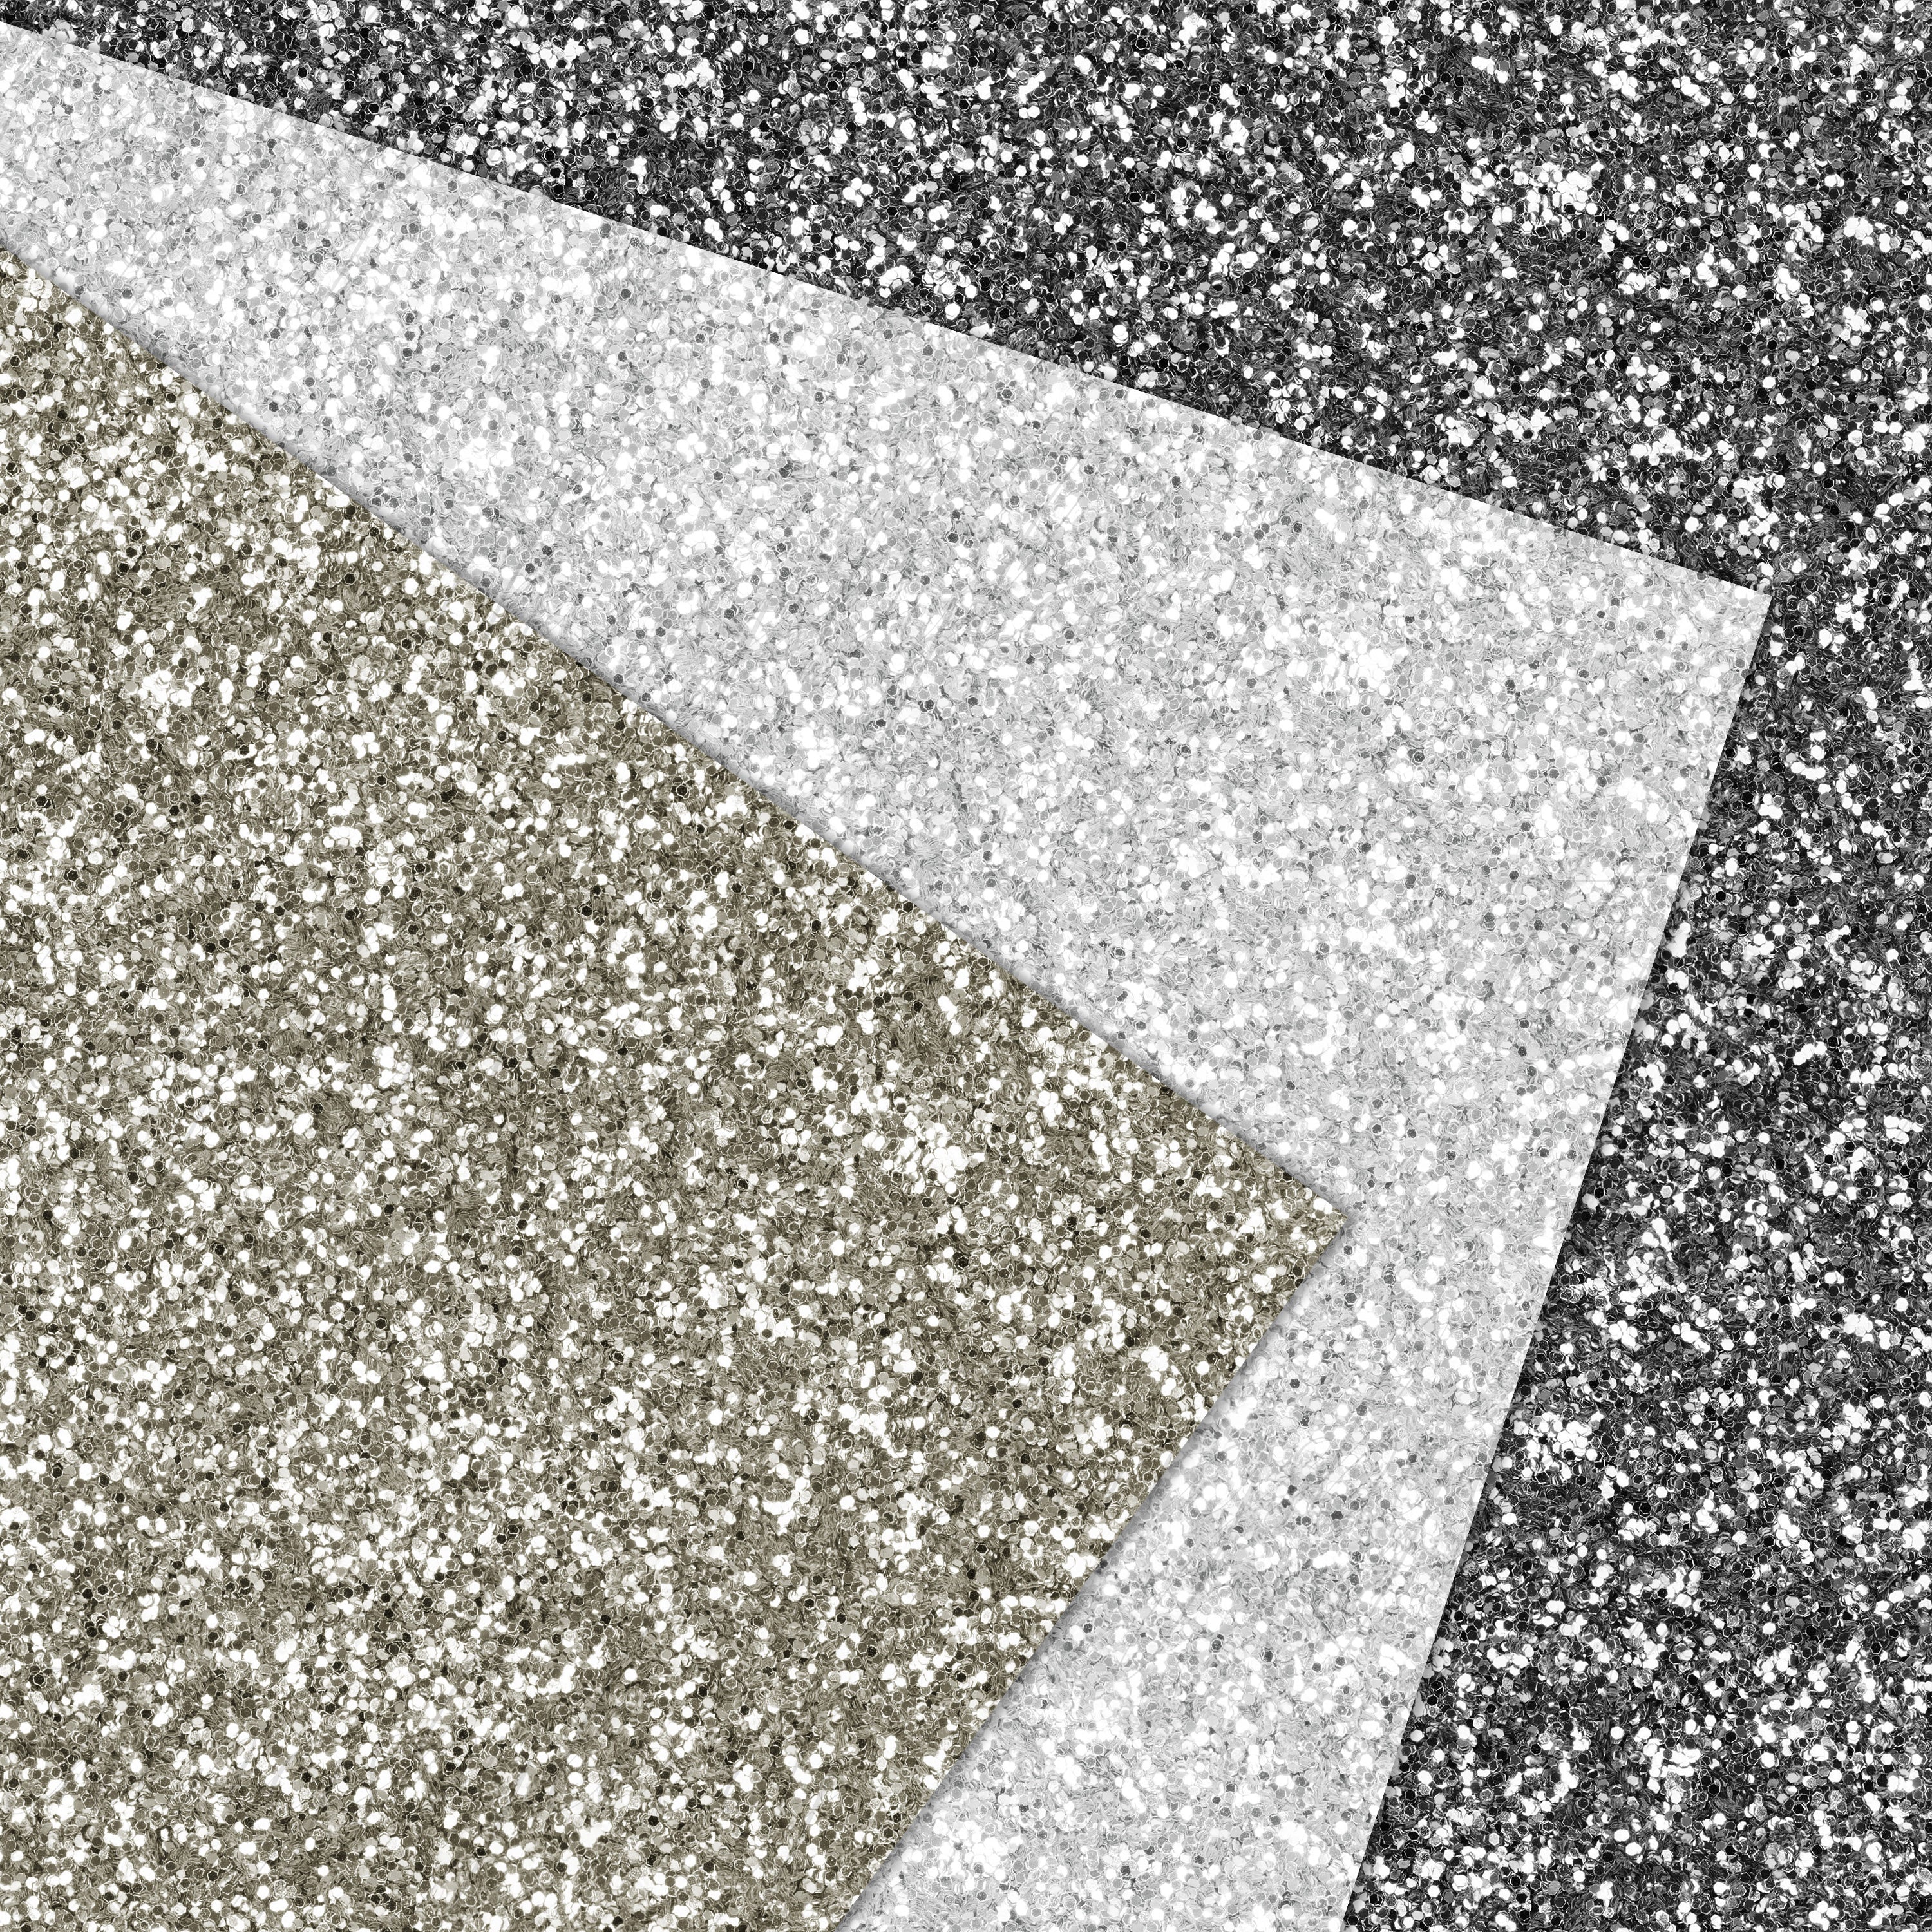 100 Seamless Light Shade Glitter Digital Papers